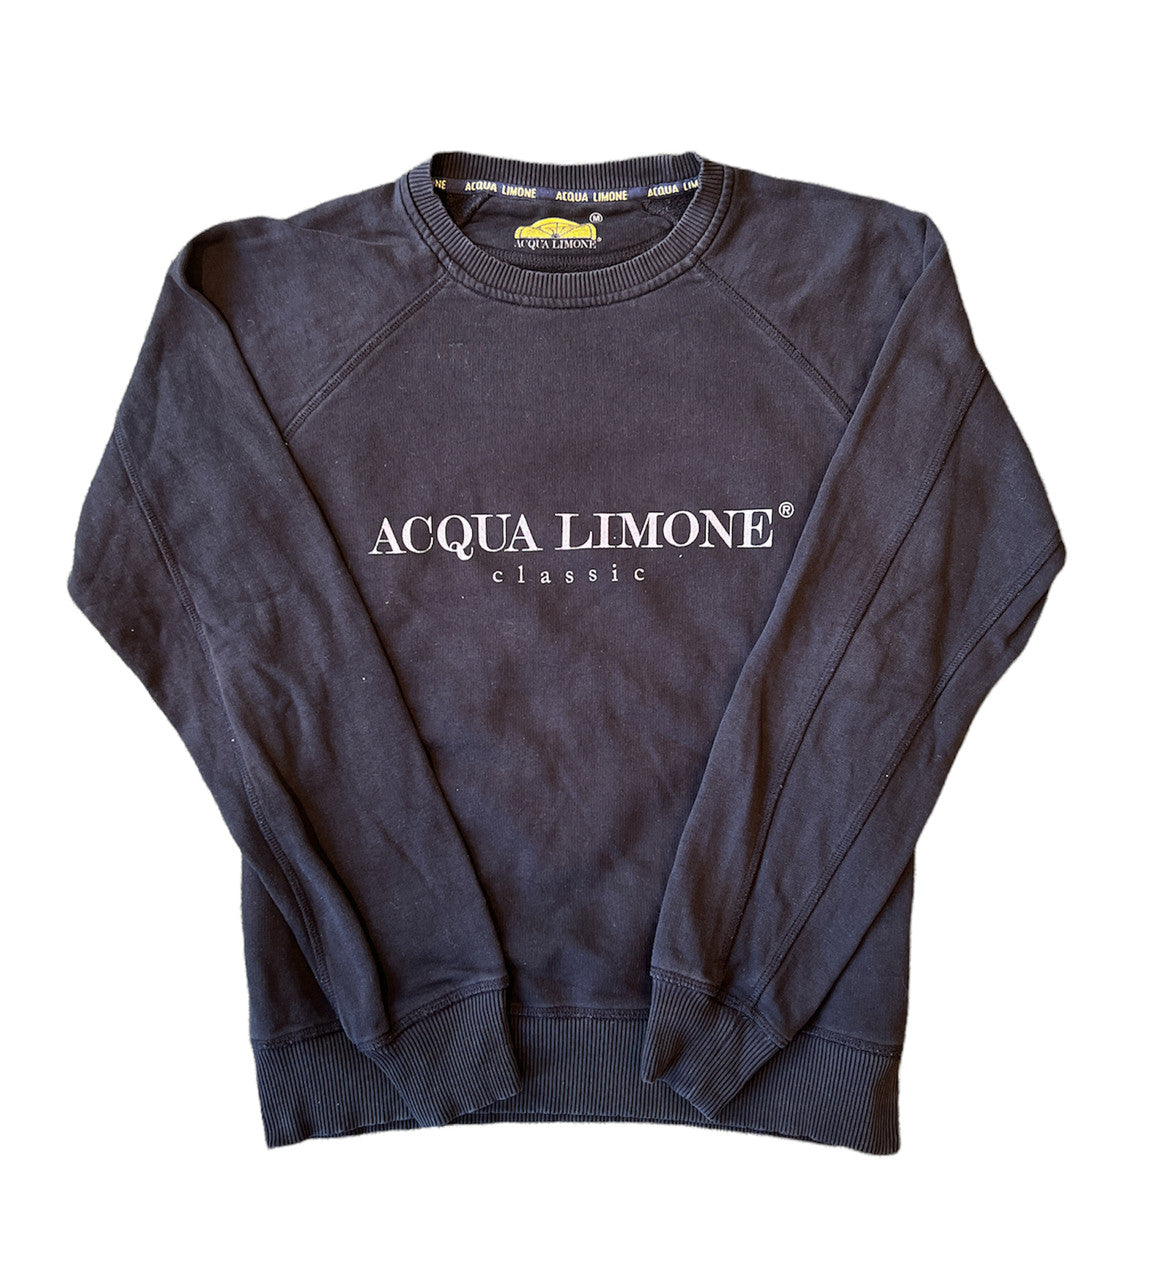 Aqua Limone Sweatshirt